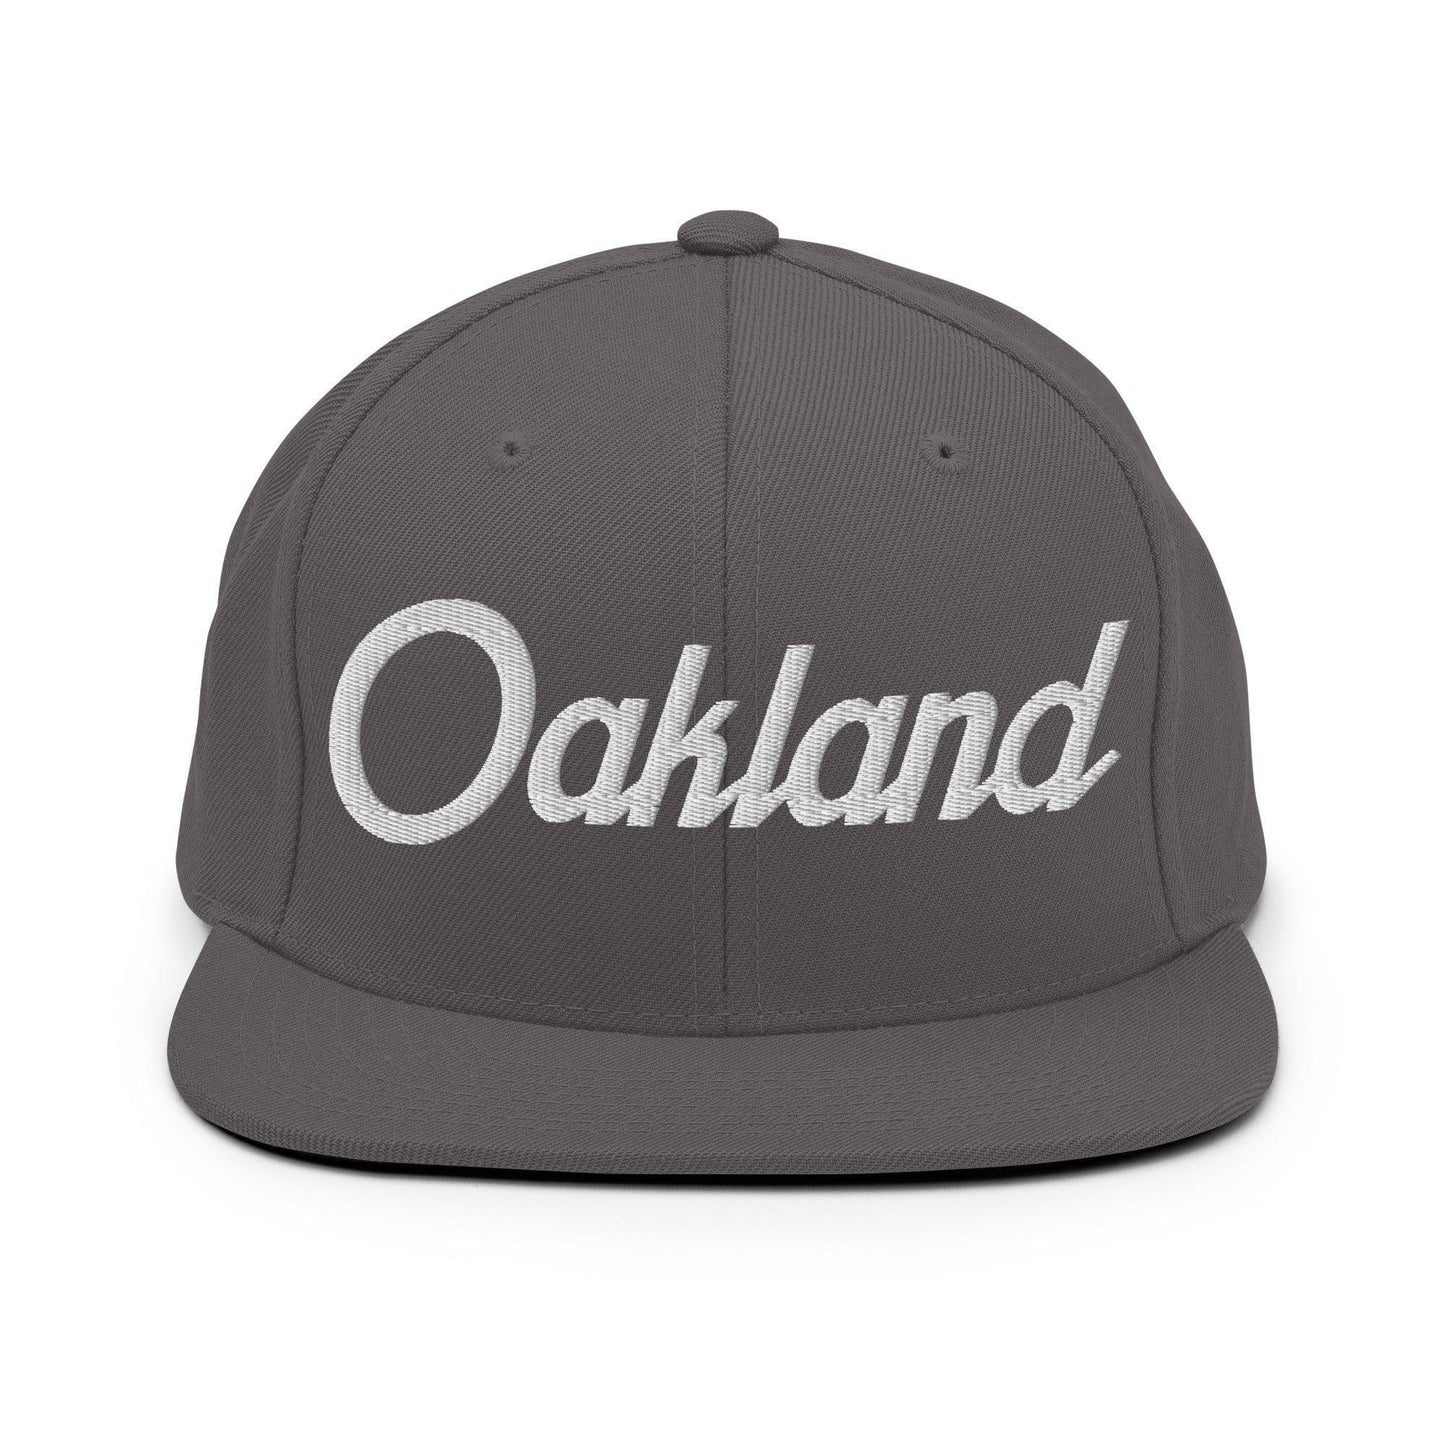 Oakland Script Snapback Hat Dark Grey